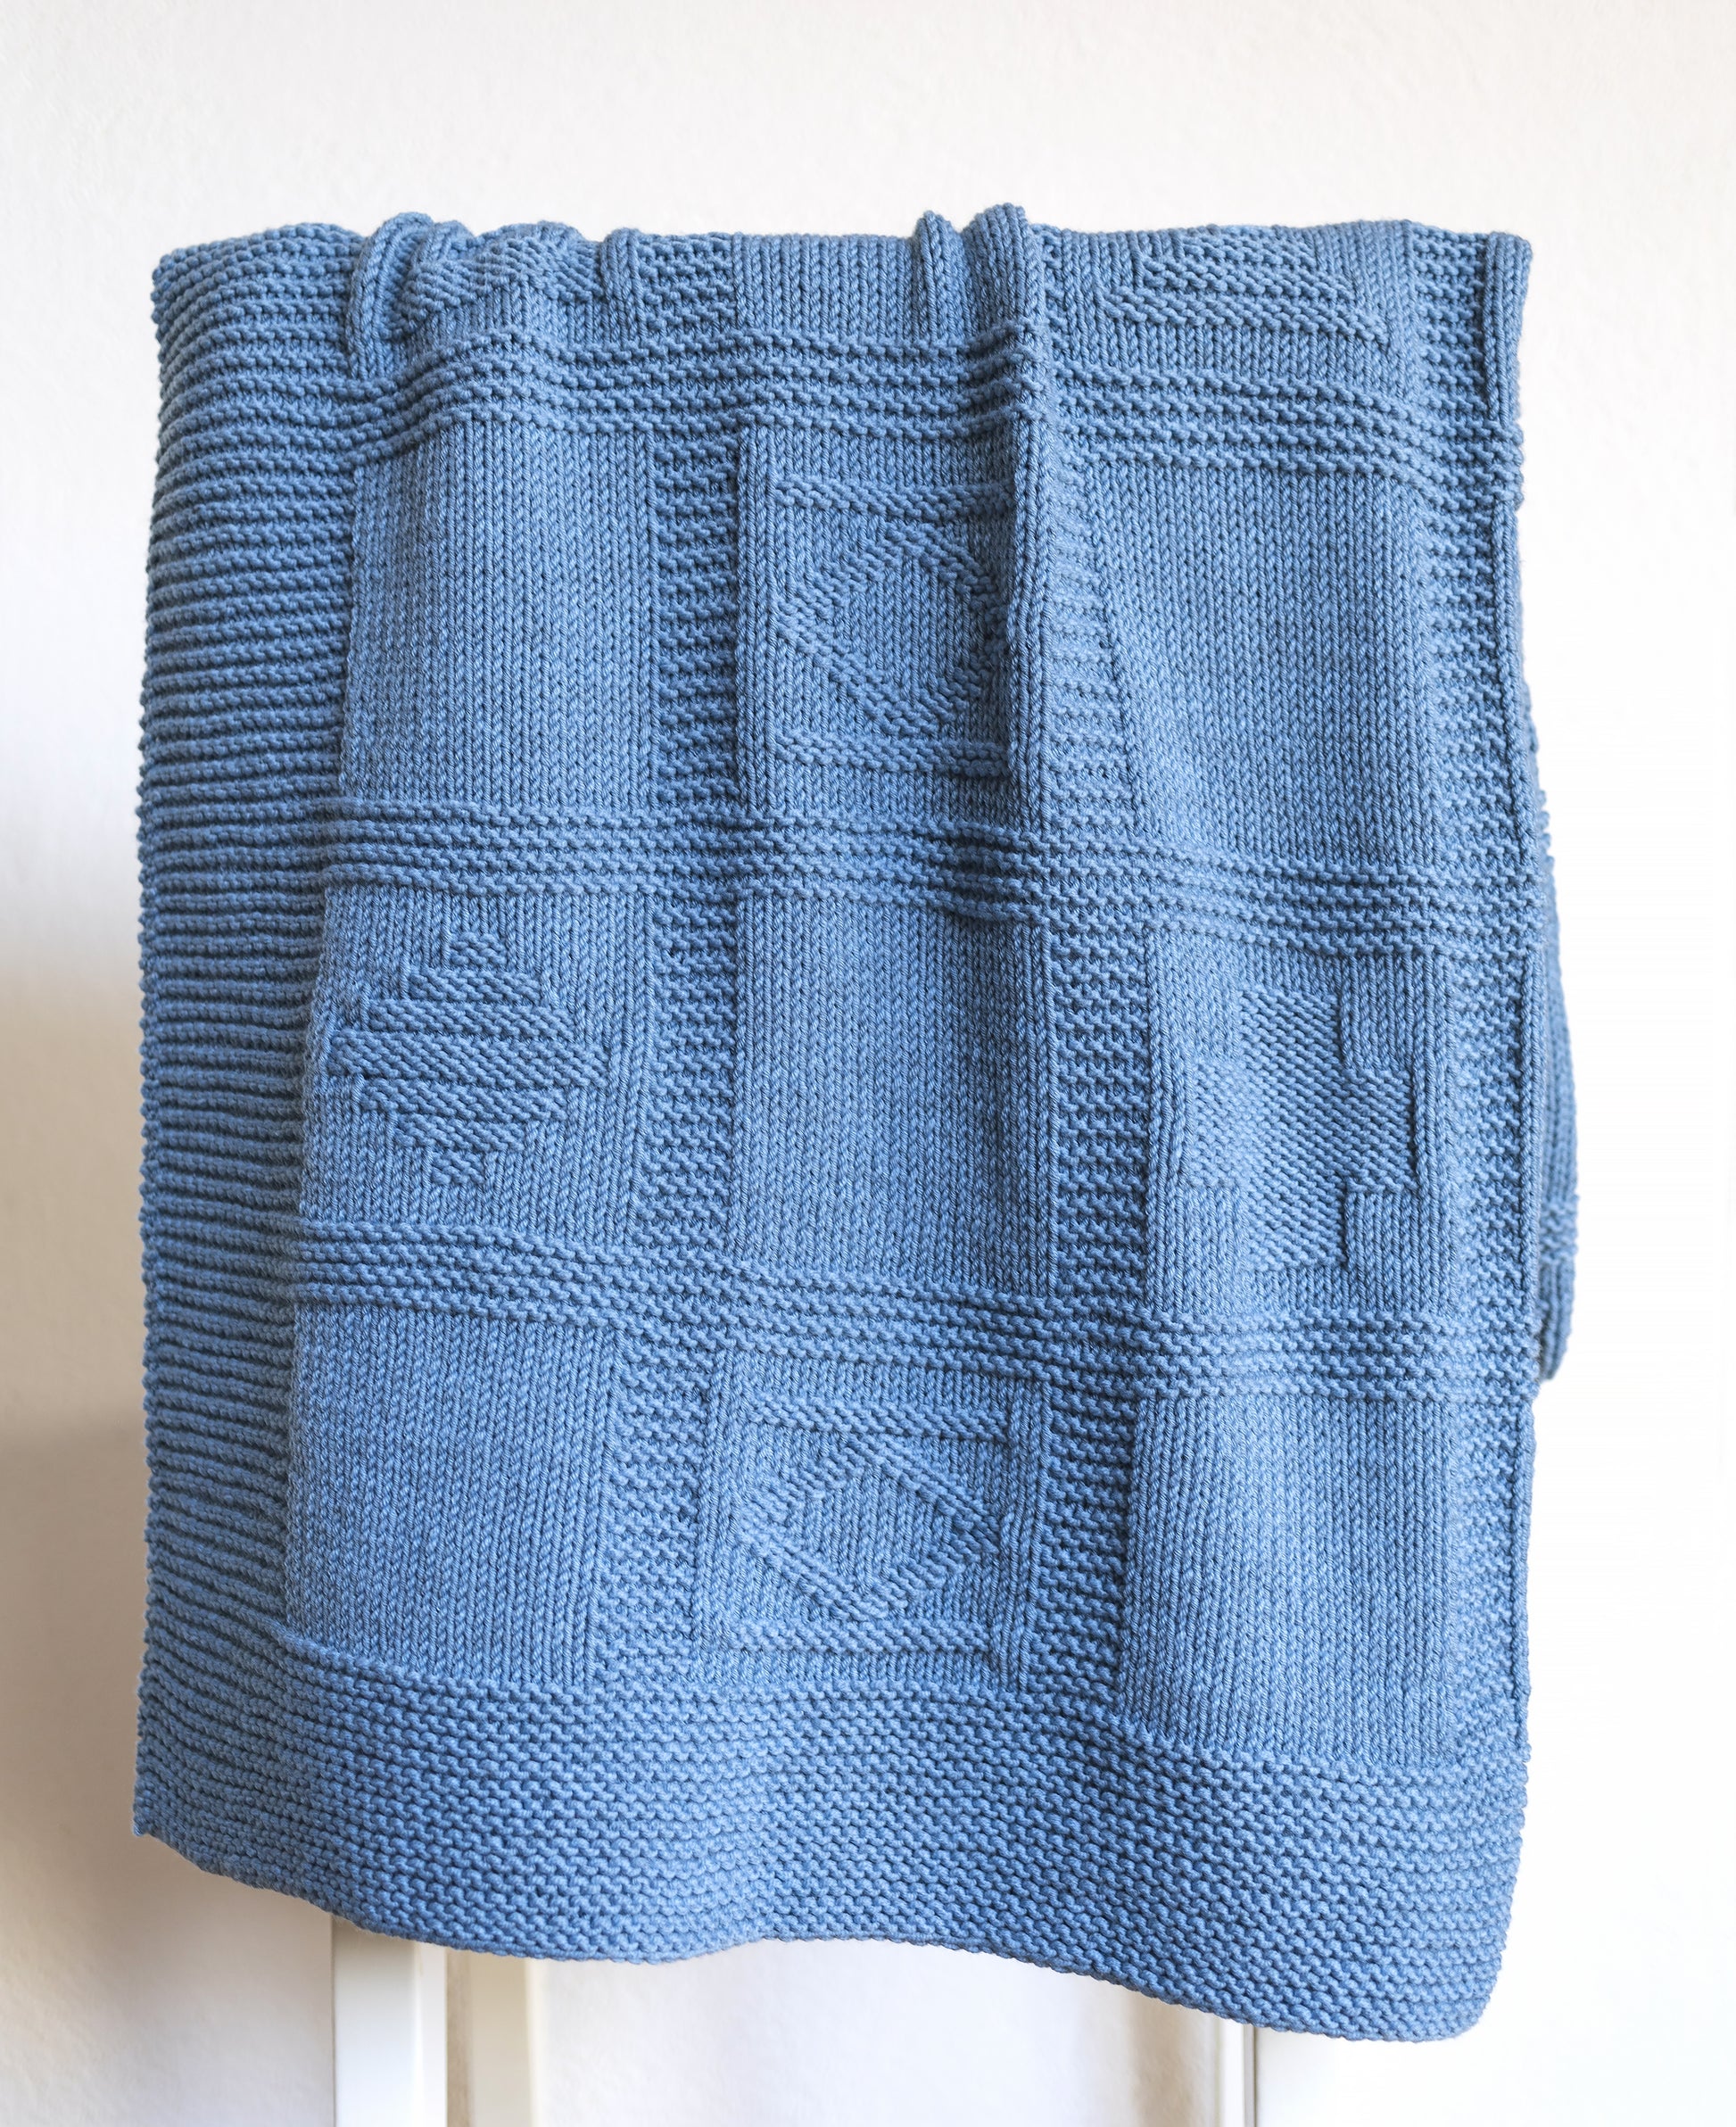 details of blue merino wool yarn hand-knitted baby blanket in geometrical knitting pattern